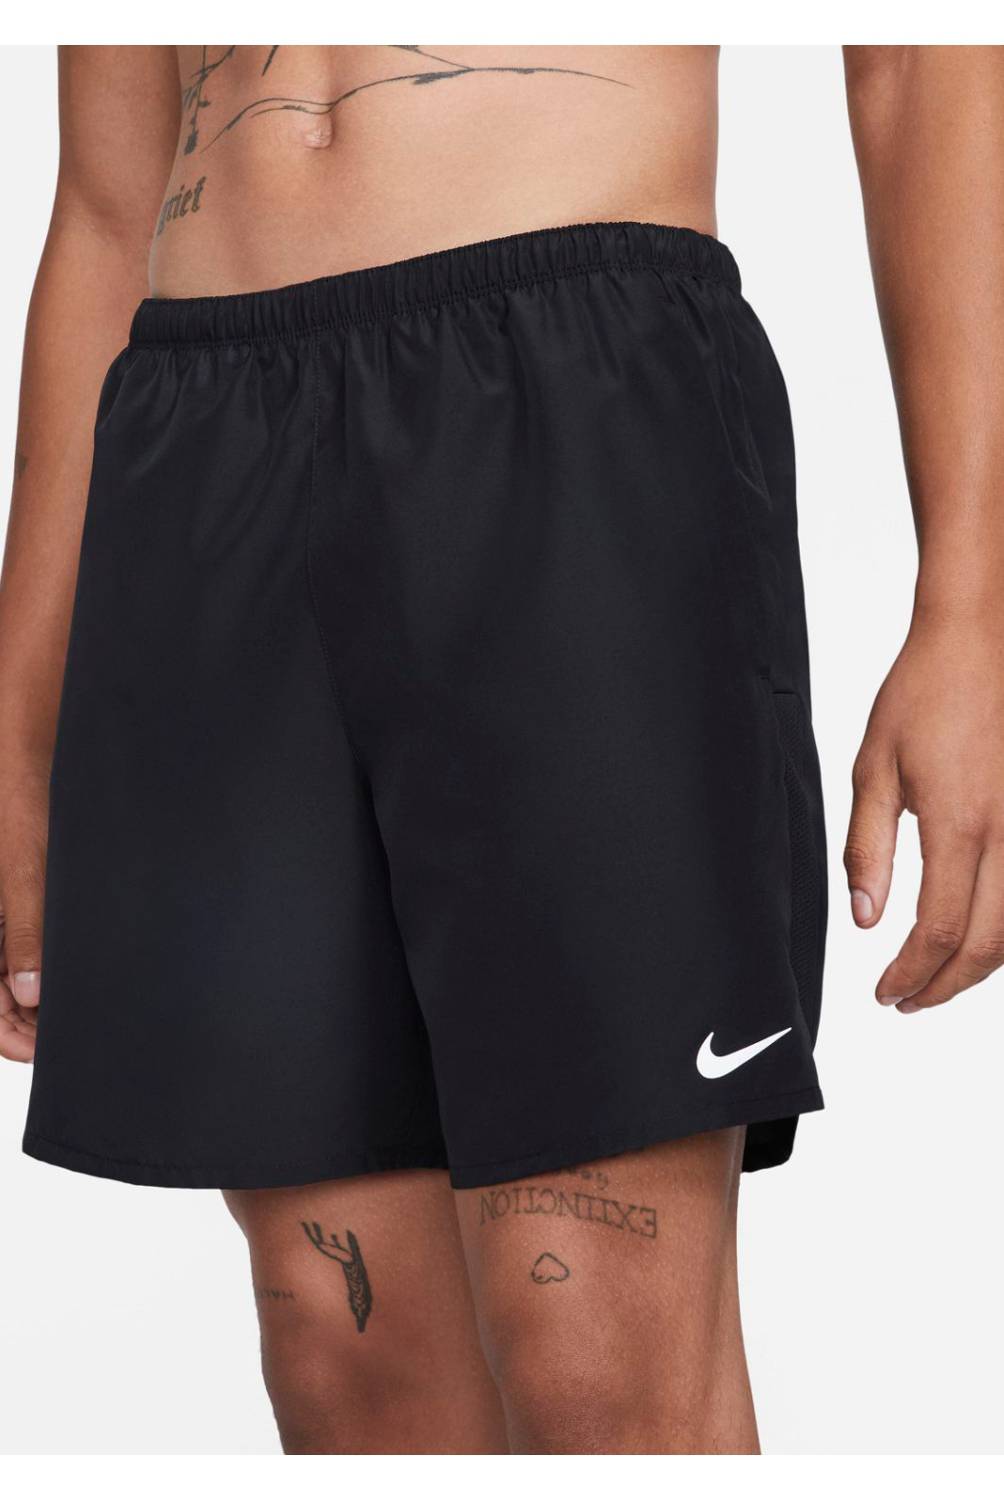 NIKE - Shorts Running Nike Challenger